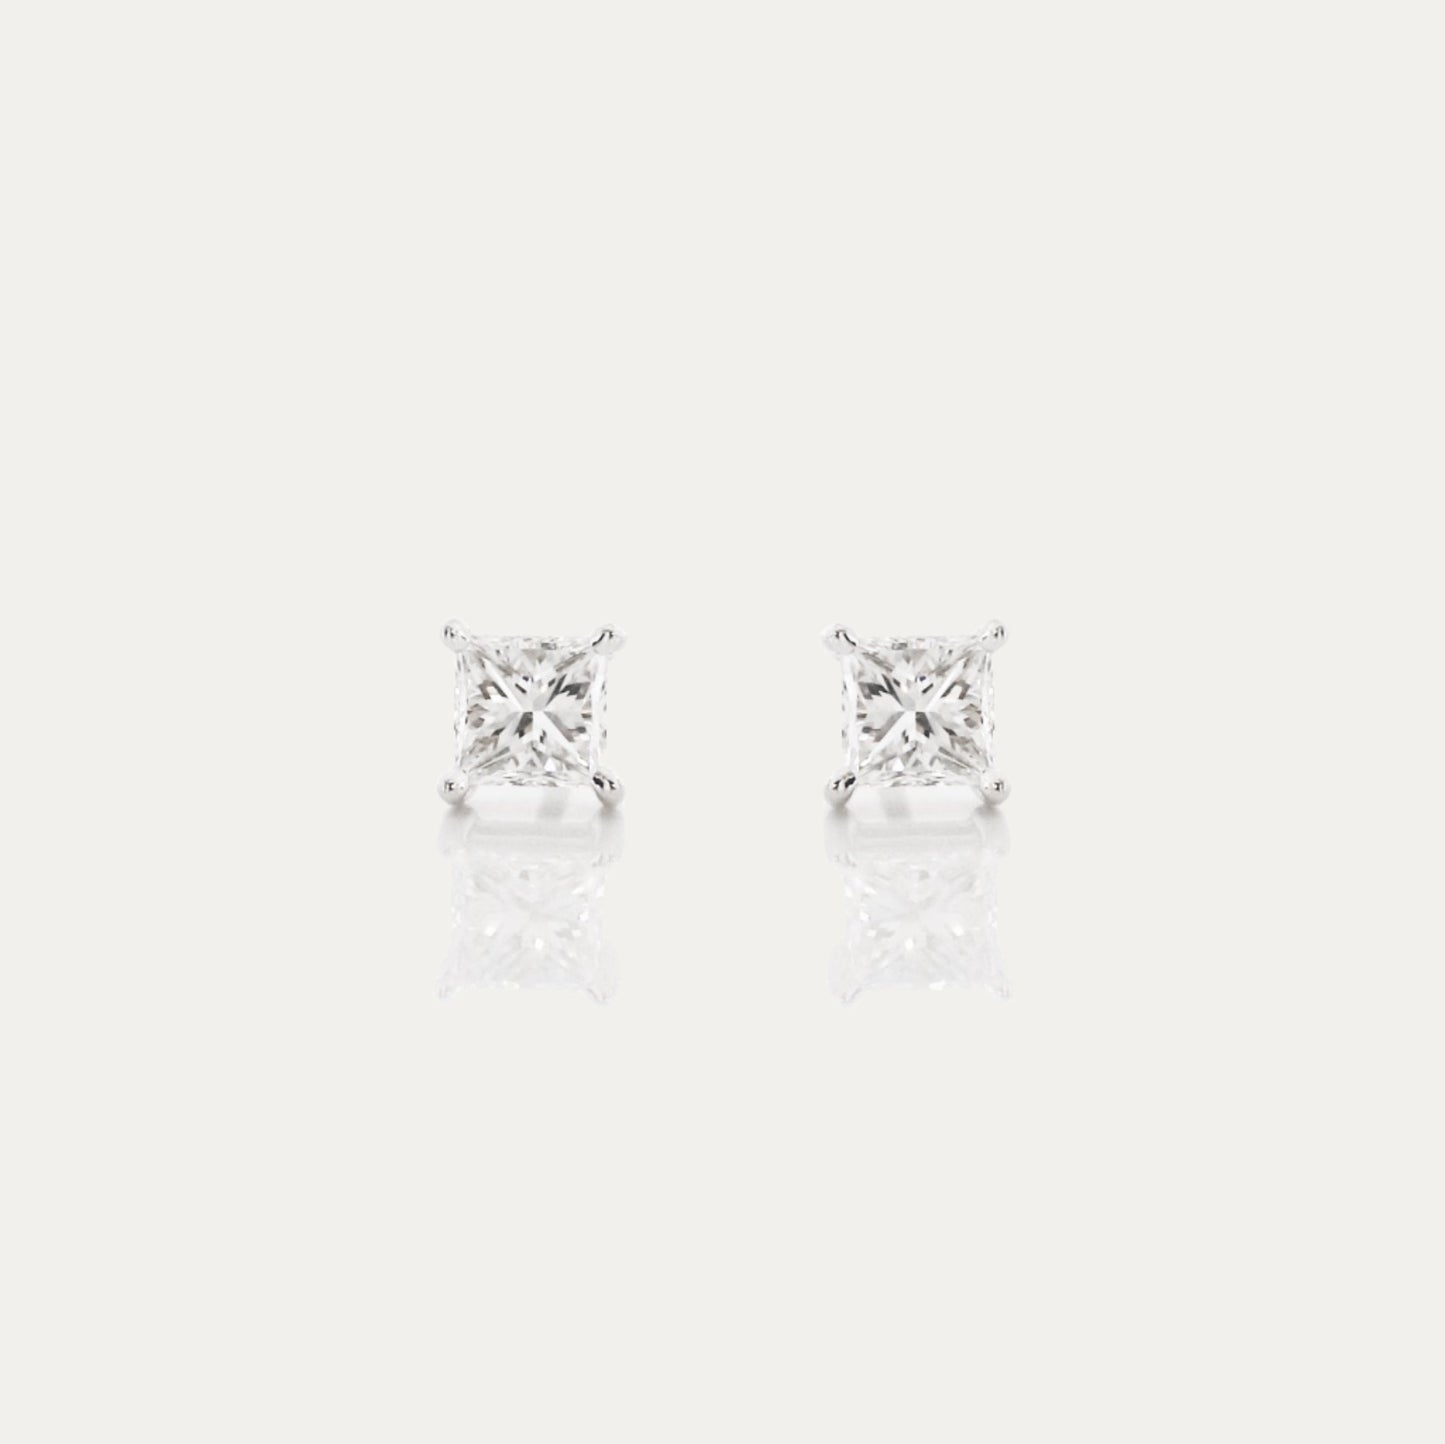 18k White Gold Princess Cut Diamond Stud Earrings, Single or Pair